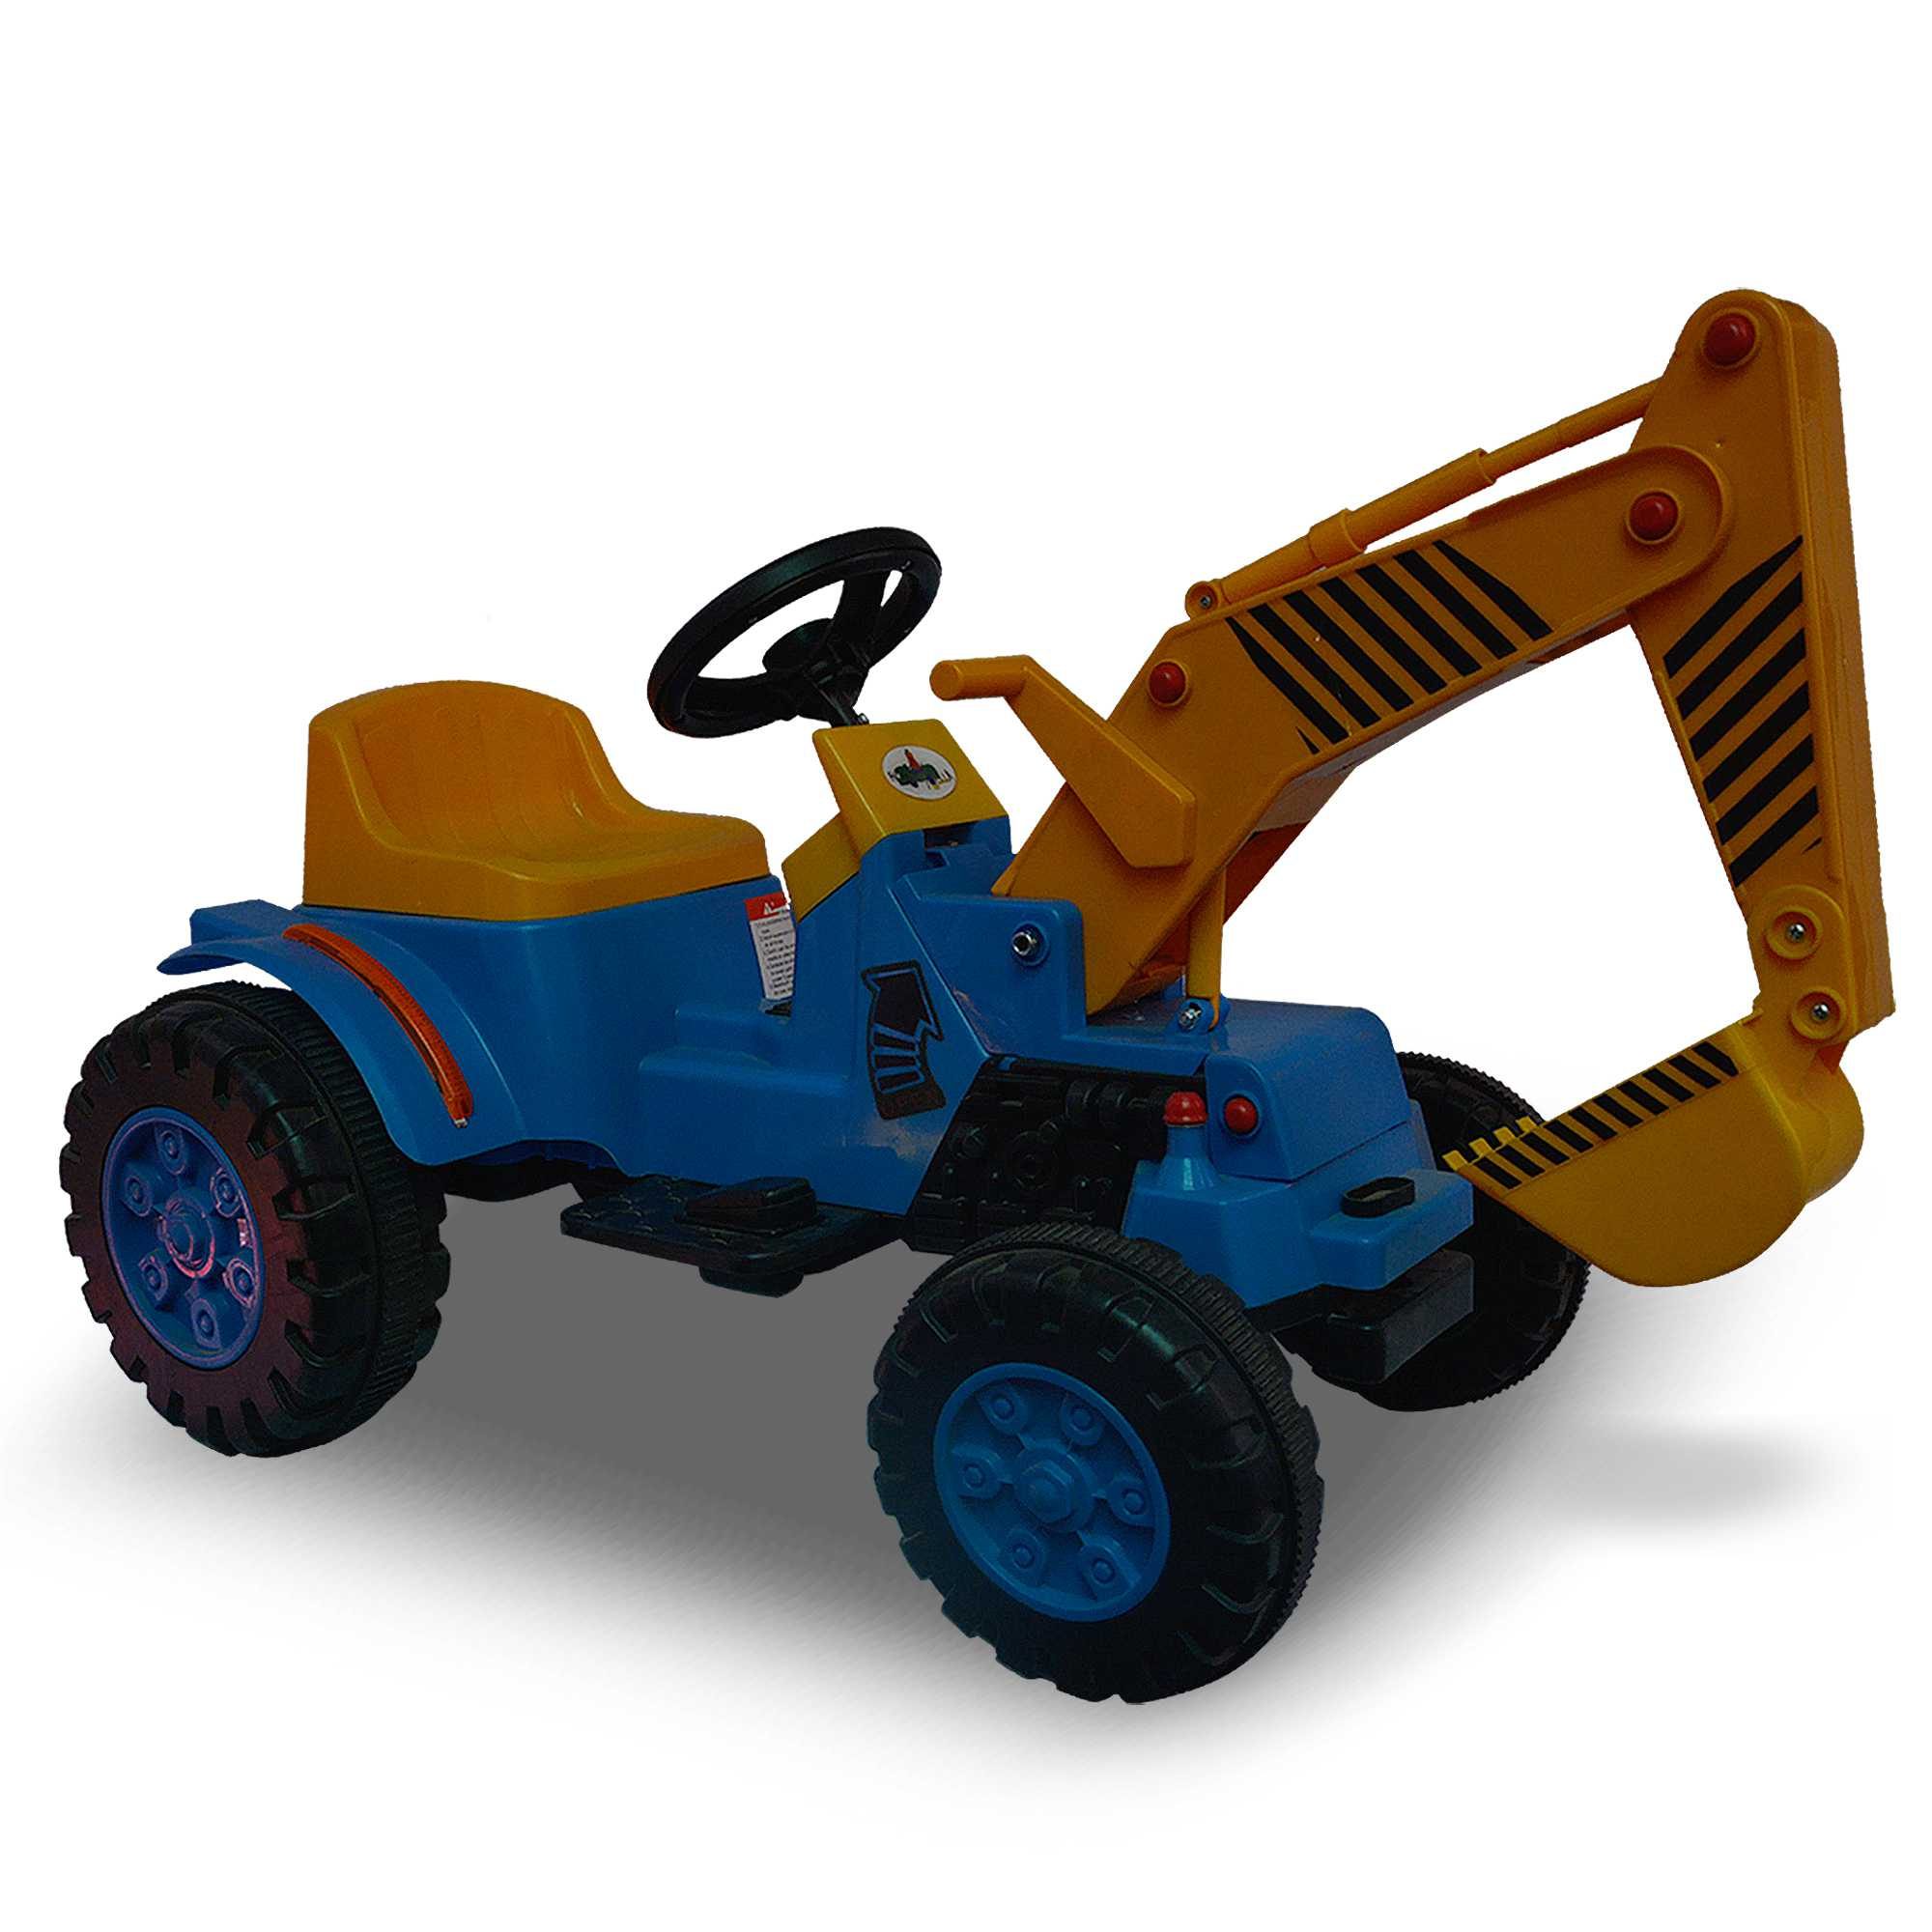 Construction excavator/loader -plastic body truck toy for children